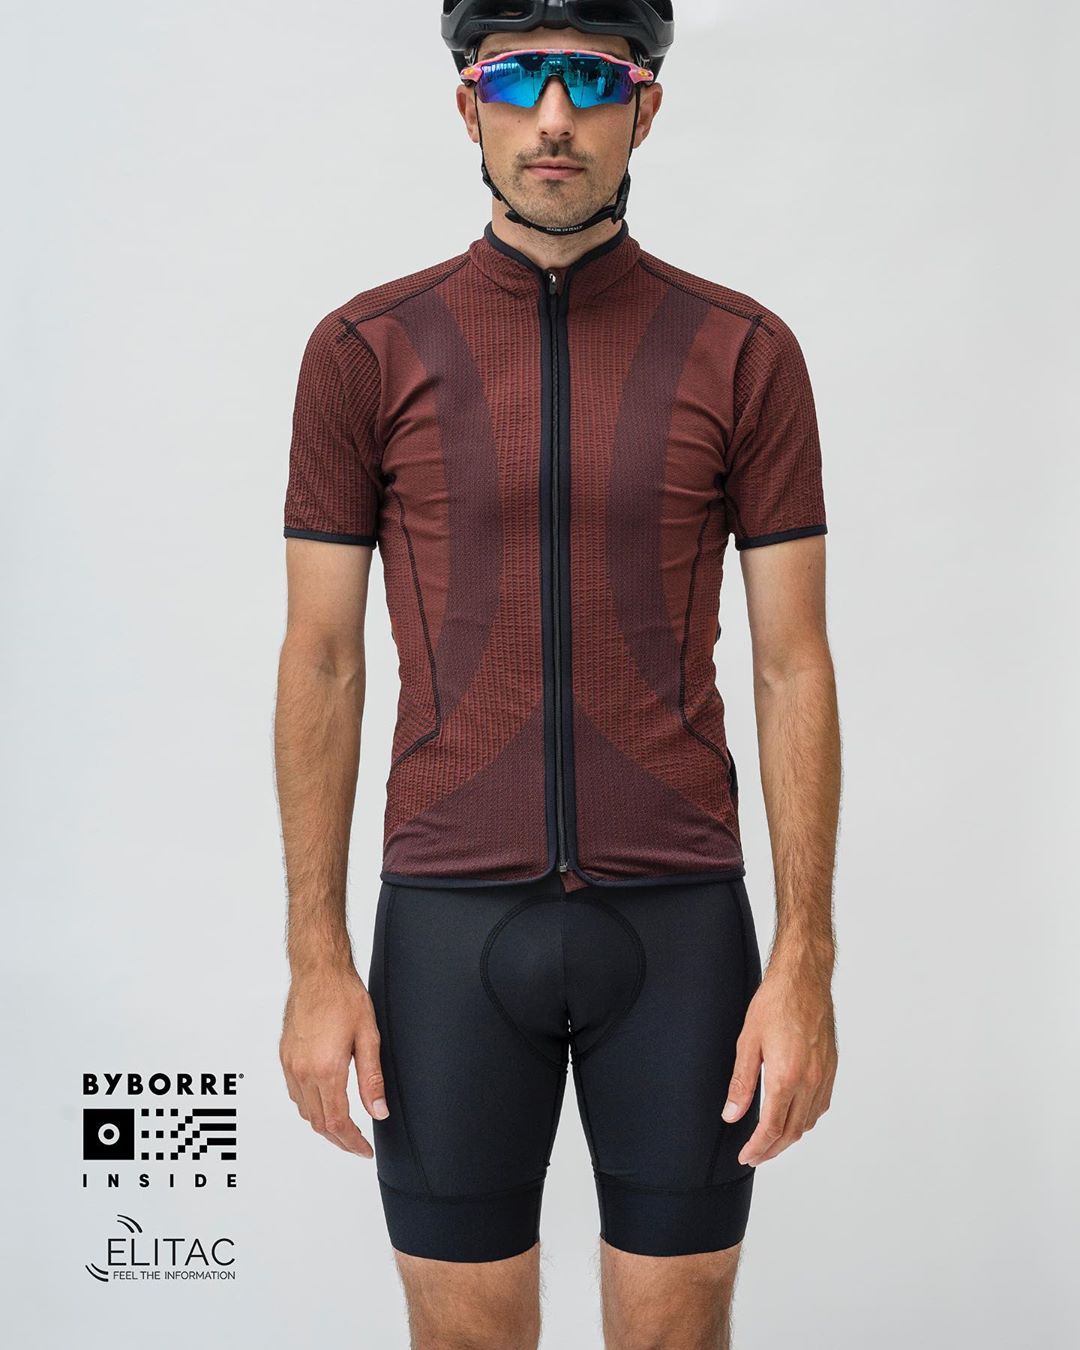 Haptic Cycling shirt